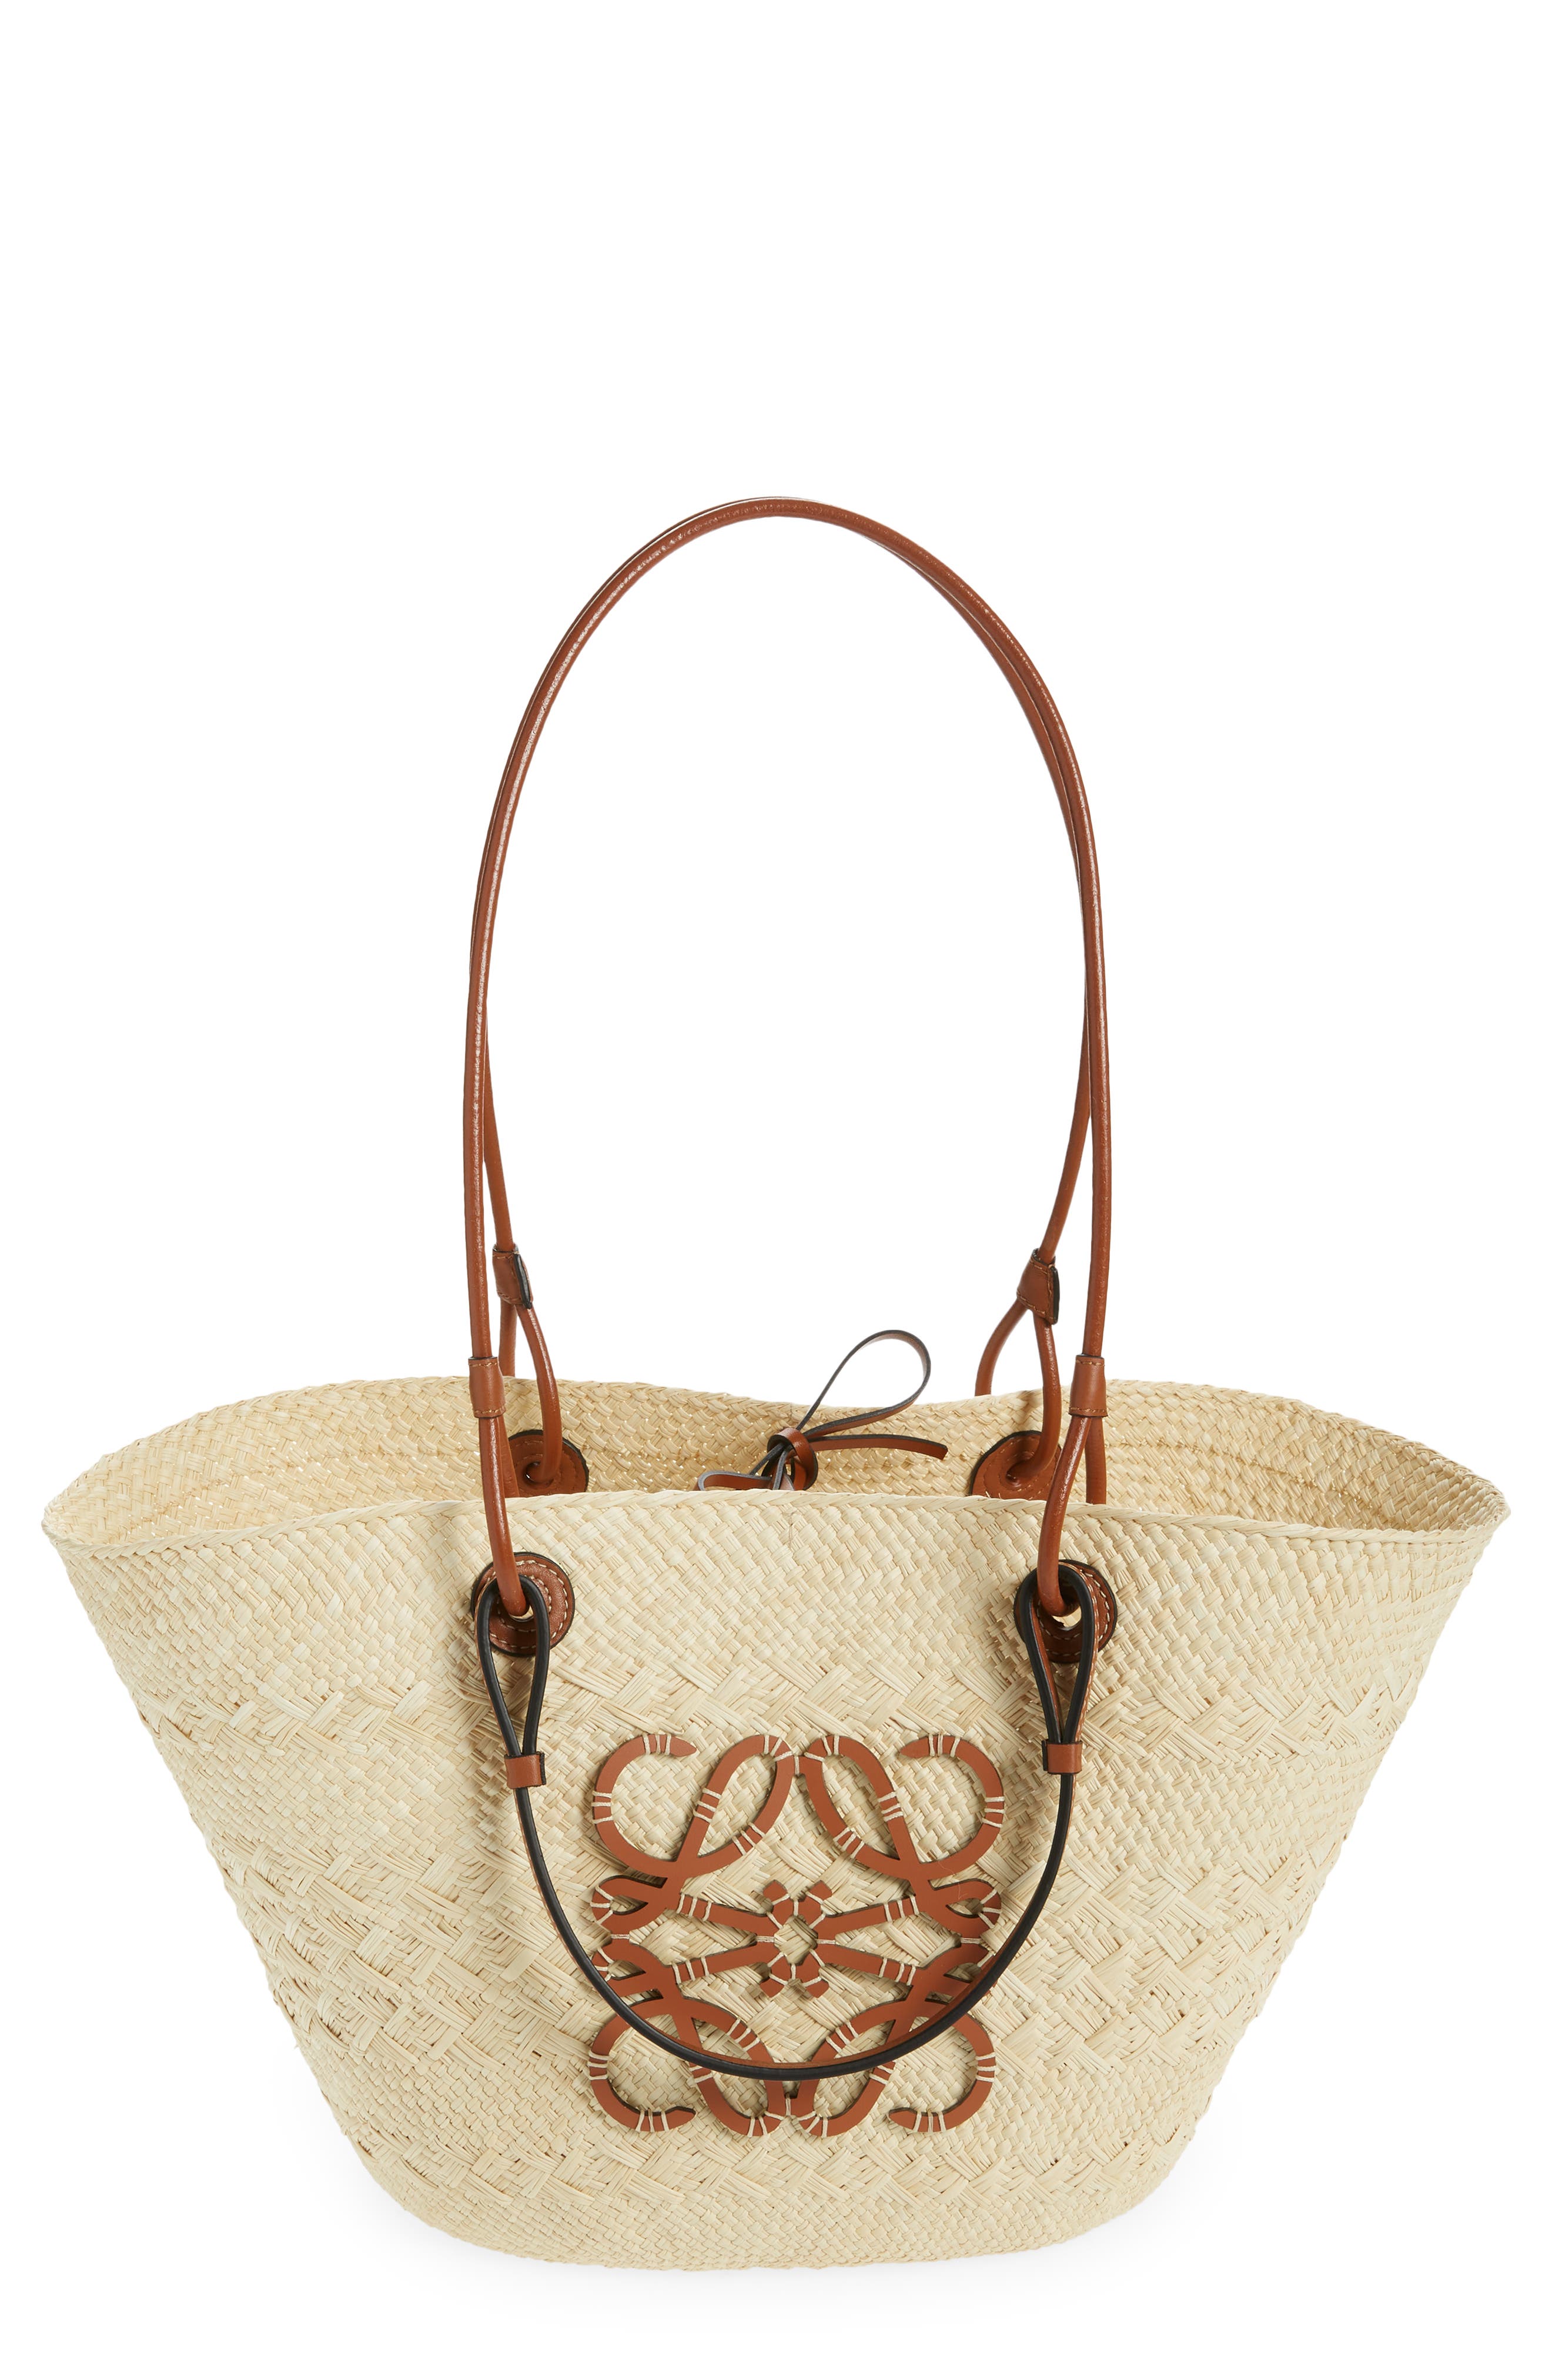 Loewe x Paula's Ibiza Anagram Iraca Palm Basket Bag in Natural/Tan at Nordstrom